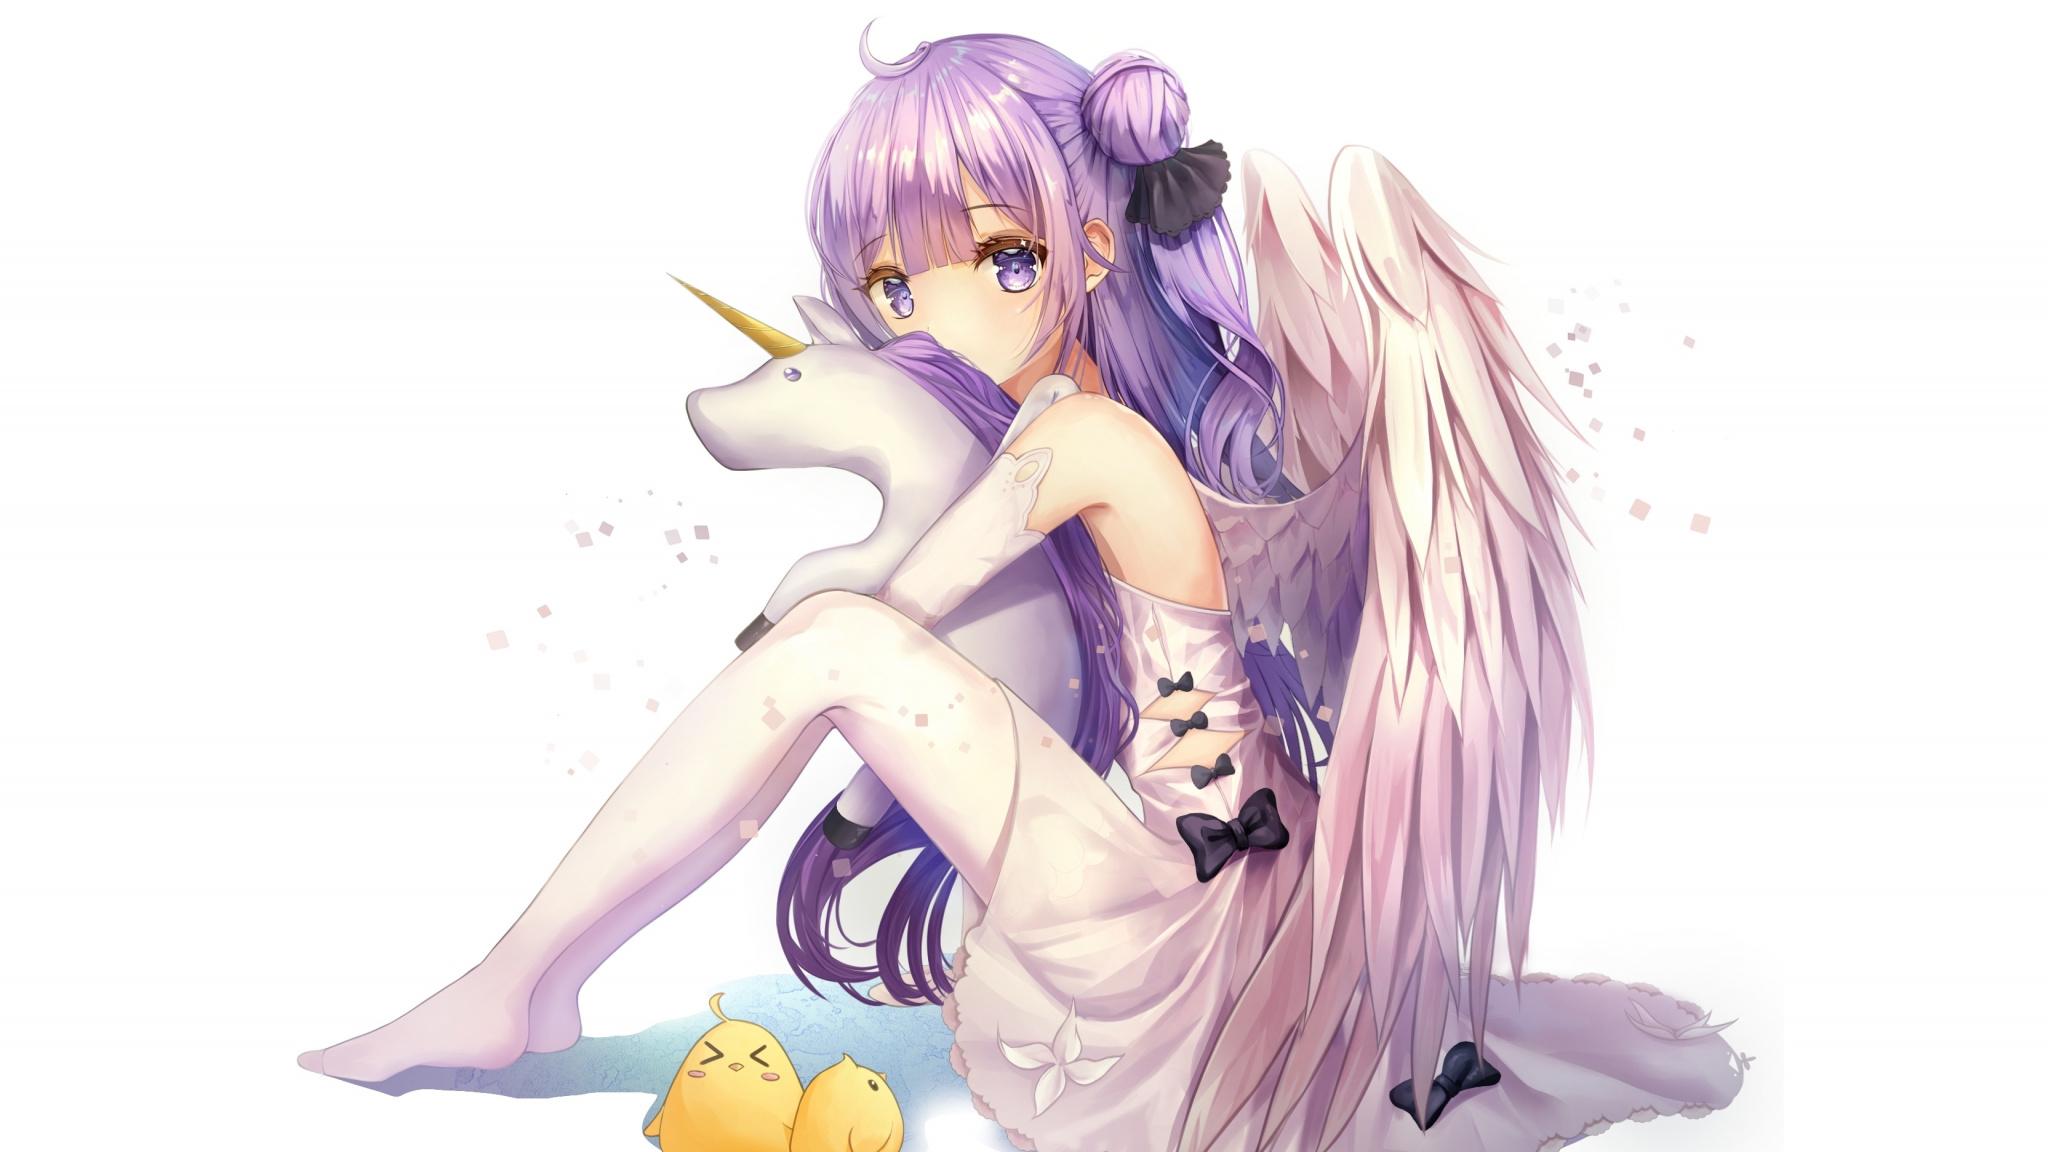 Download 2048x1152 wallpaper azur lane, unicorn with wings, anime